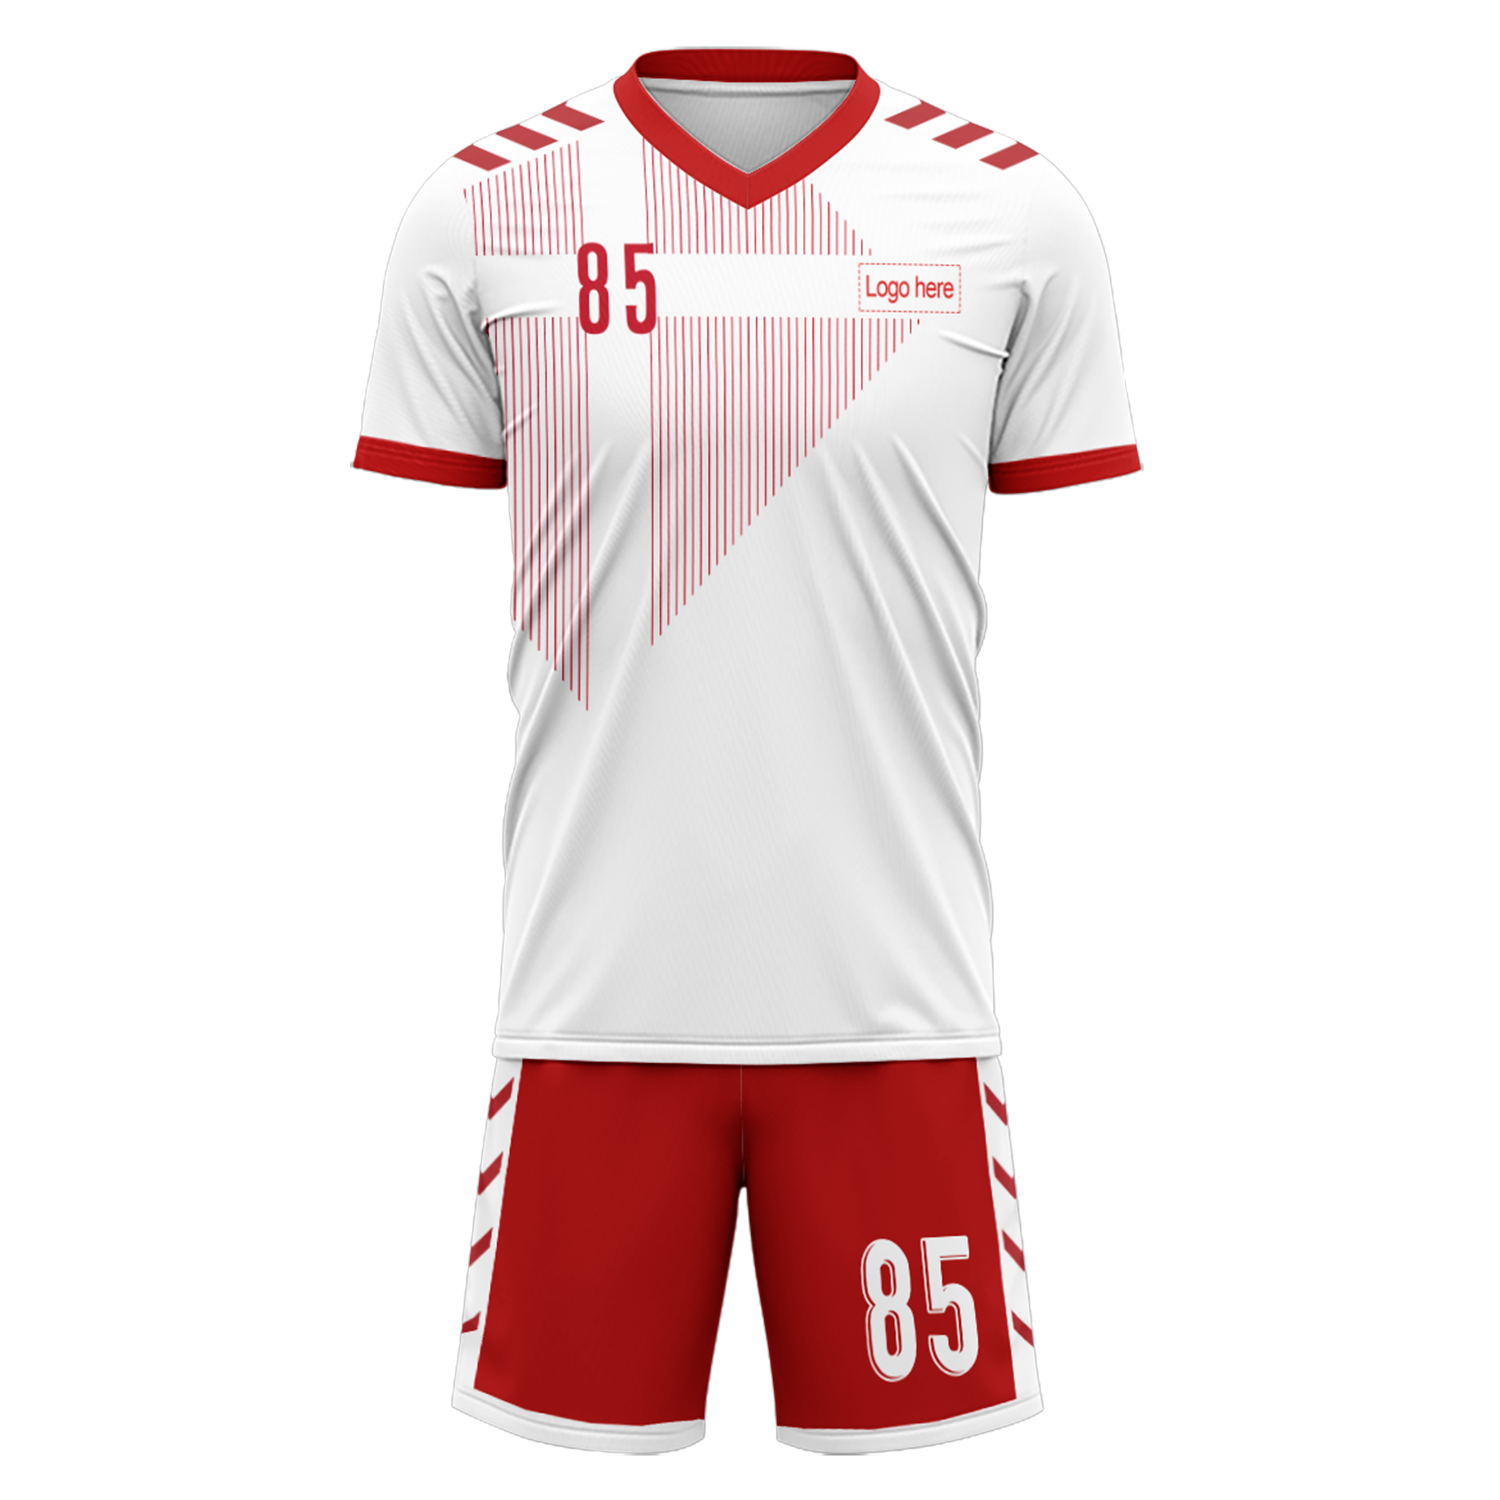 Custom Denmark Team Football Suits Personalized Design Print on Demand Soccer Jerseys